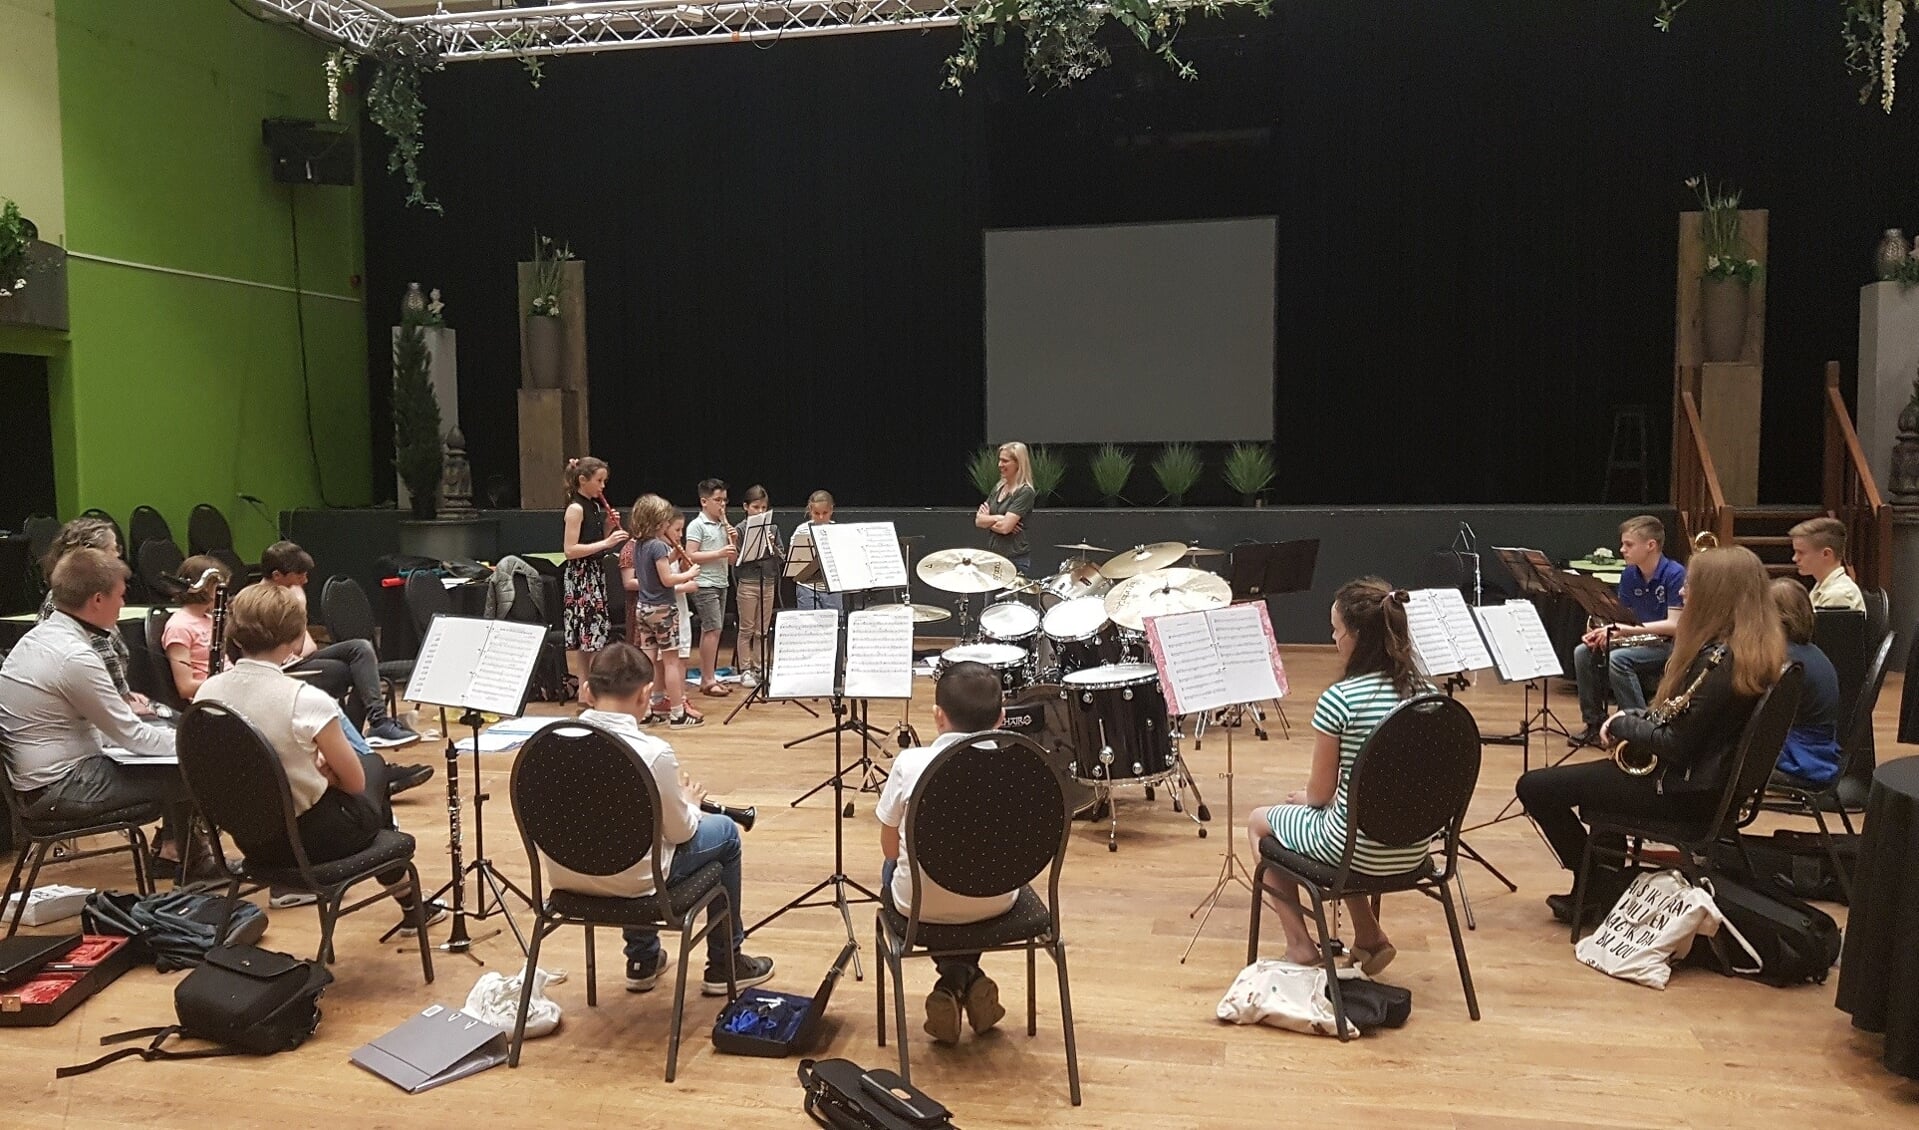 De Gennepse harmonie Unitas et Fidelitas start, na de zomervakantie de cursus Basisvorming Muziek.